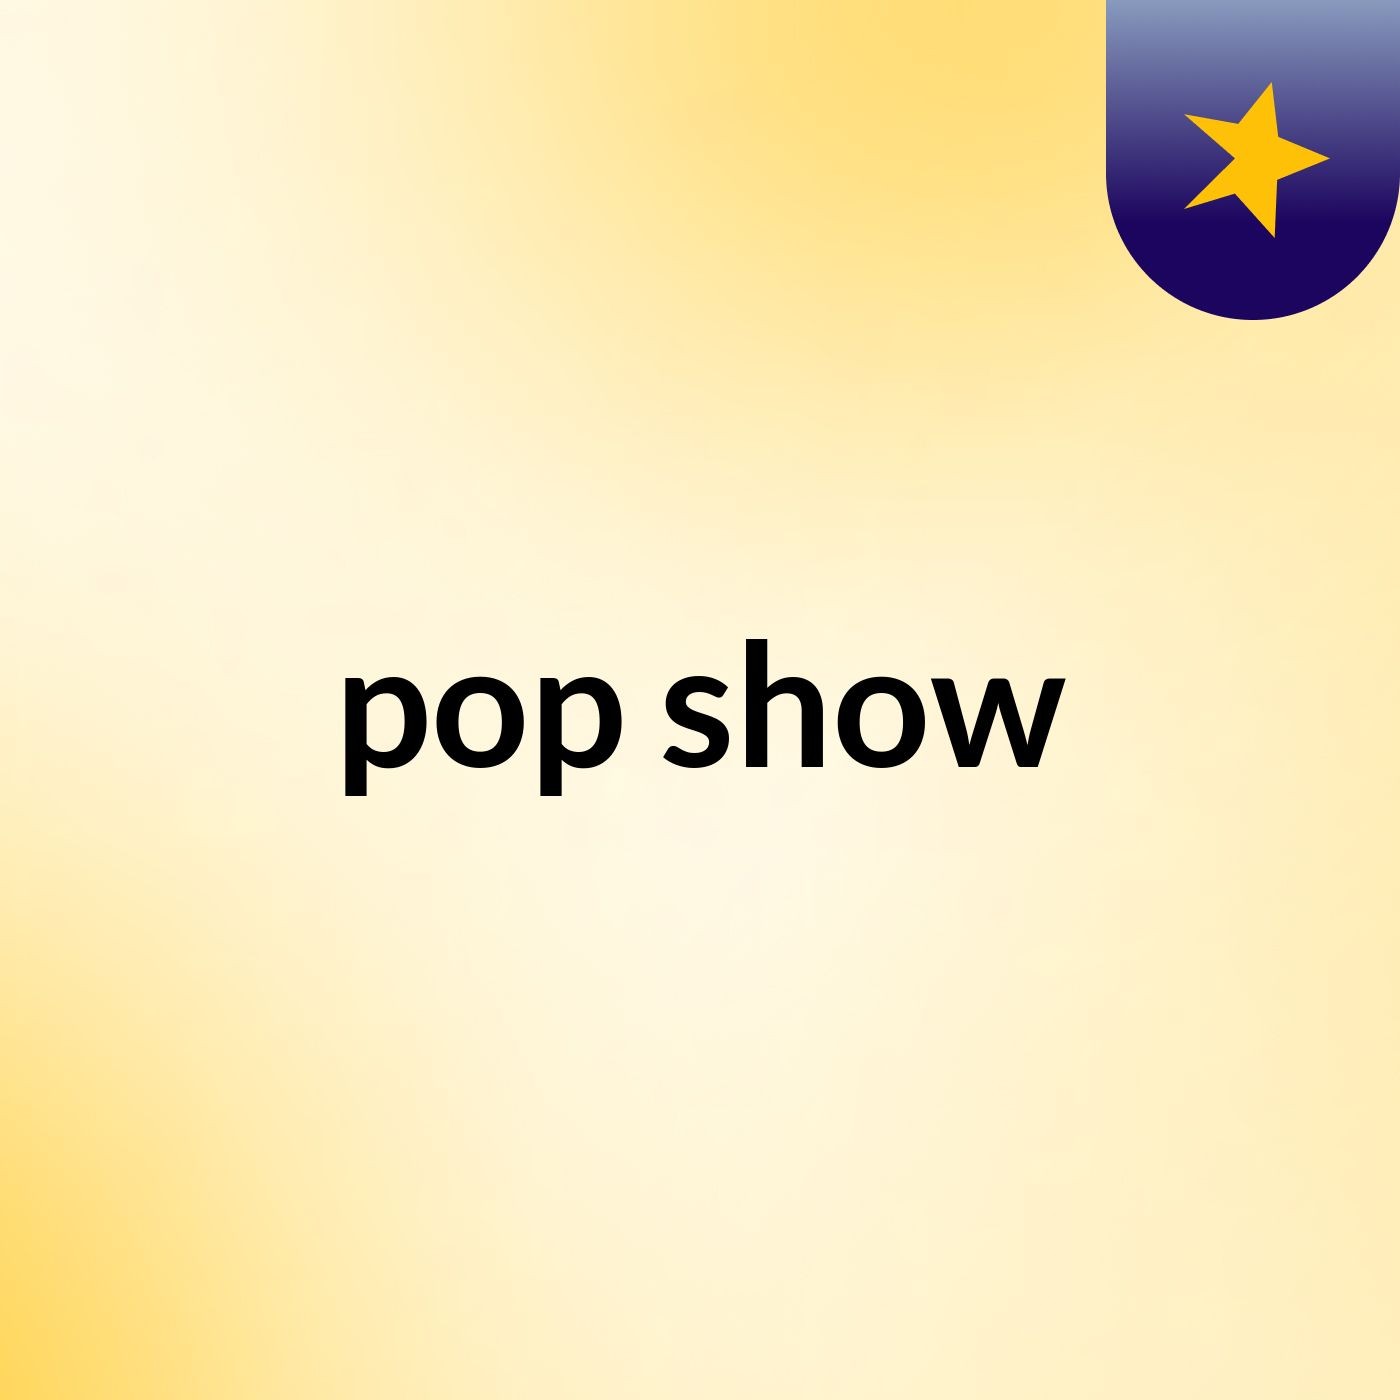 pop show